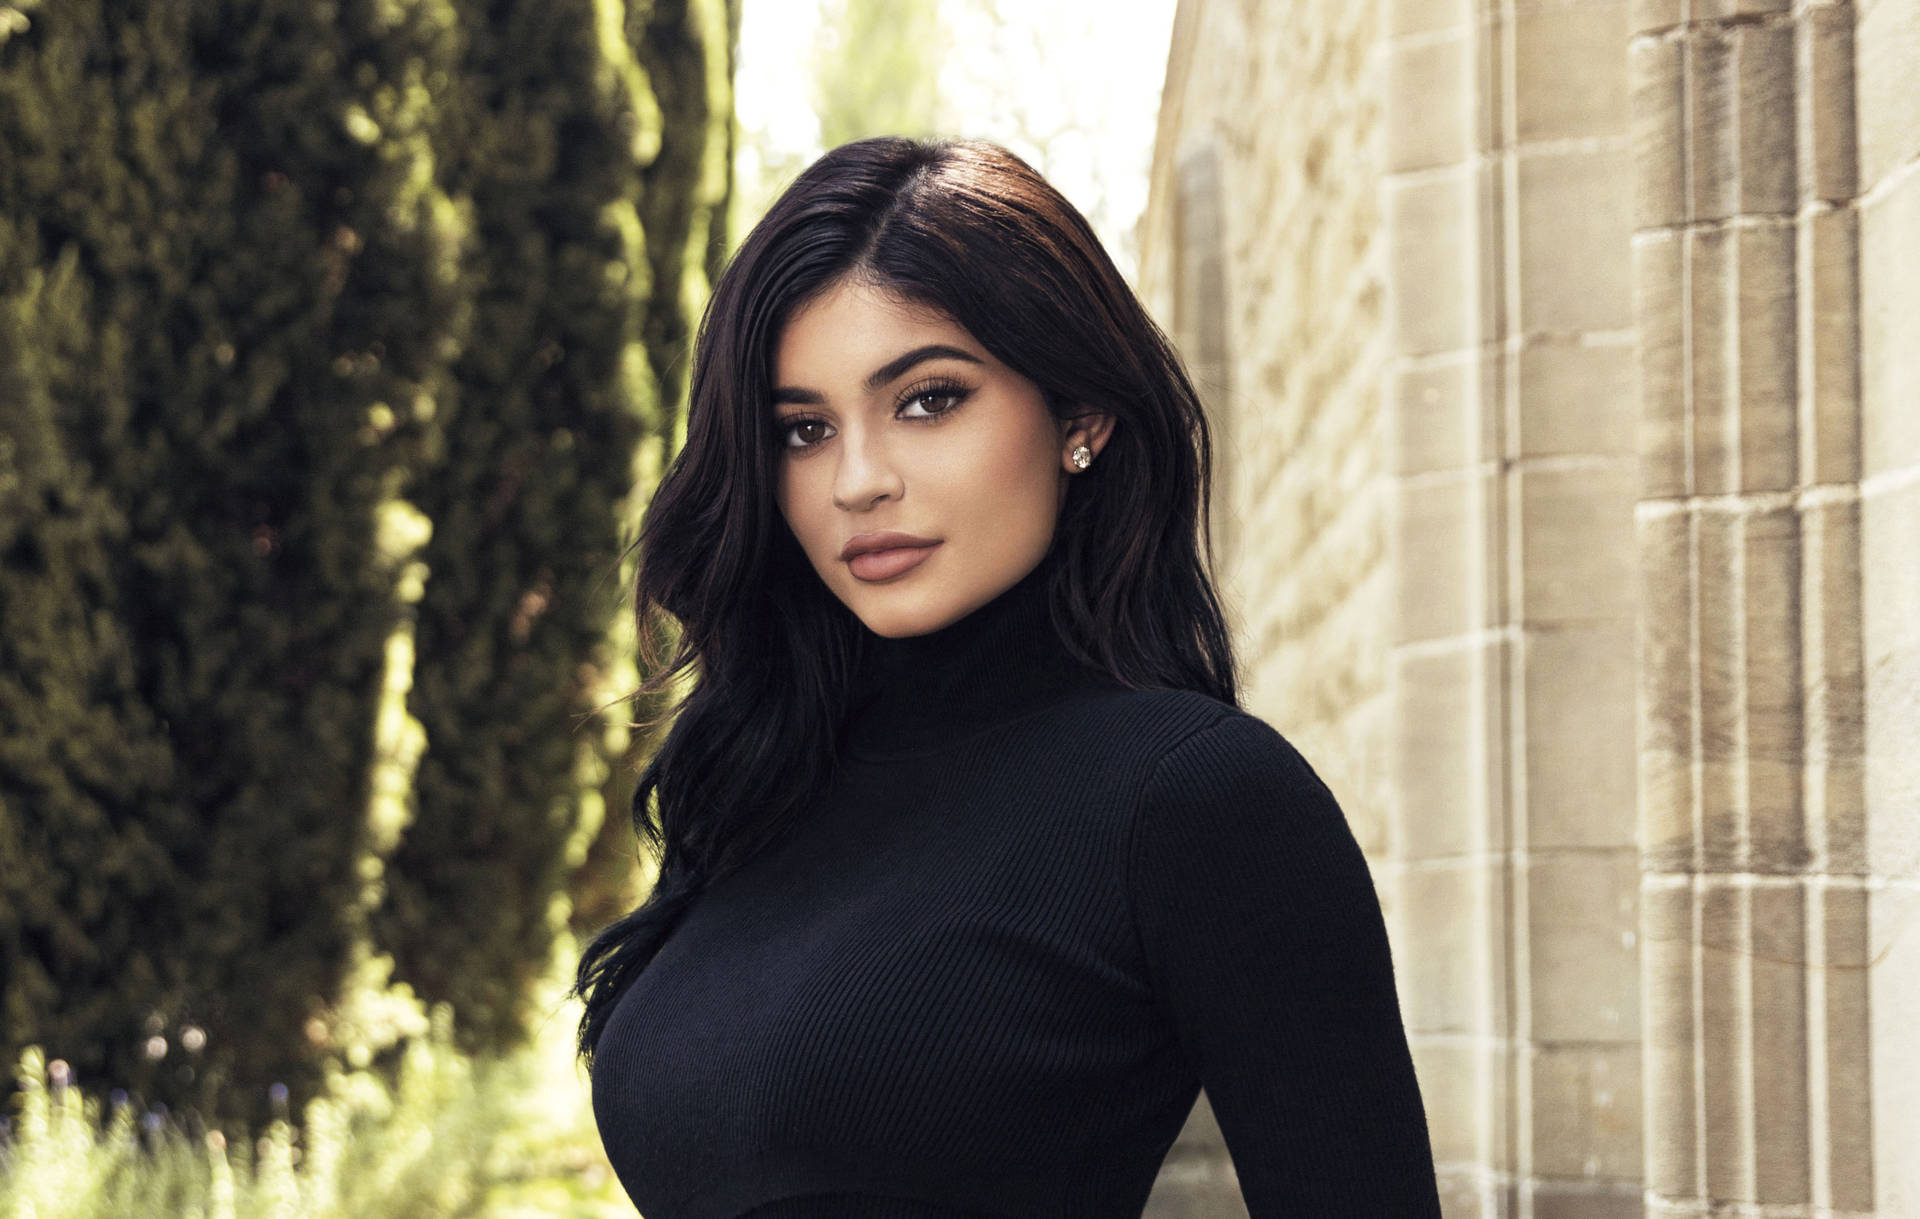 Kylie Jenner Wearing Black Top